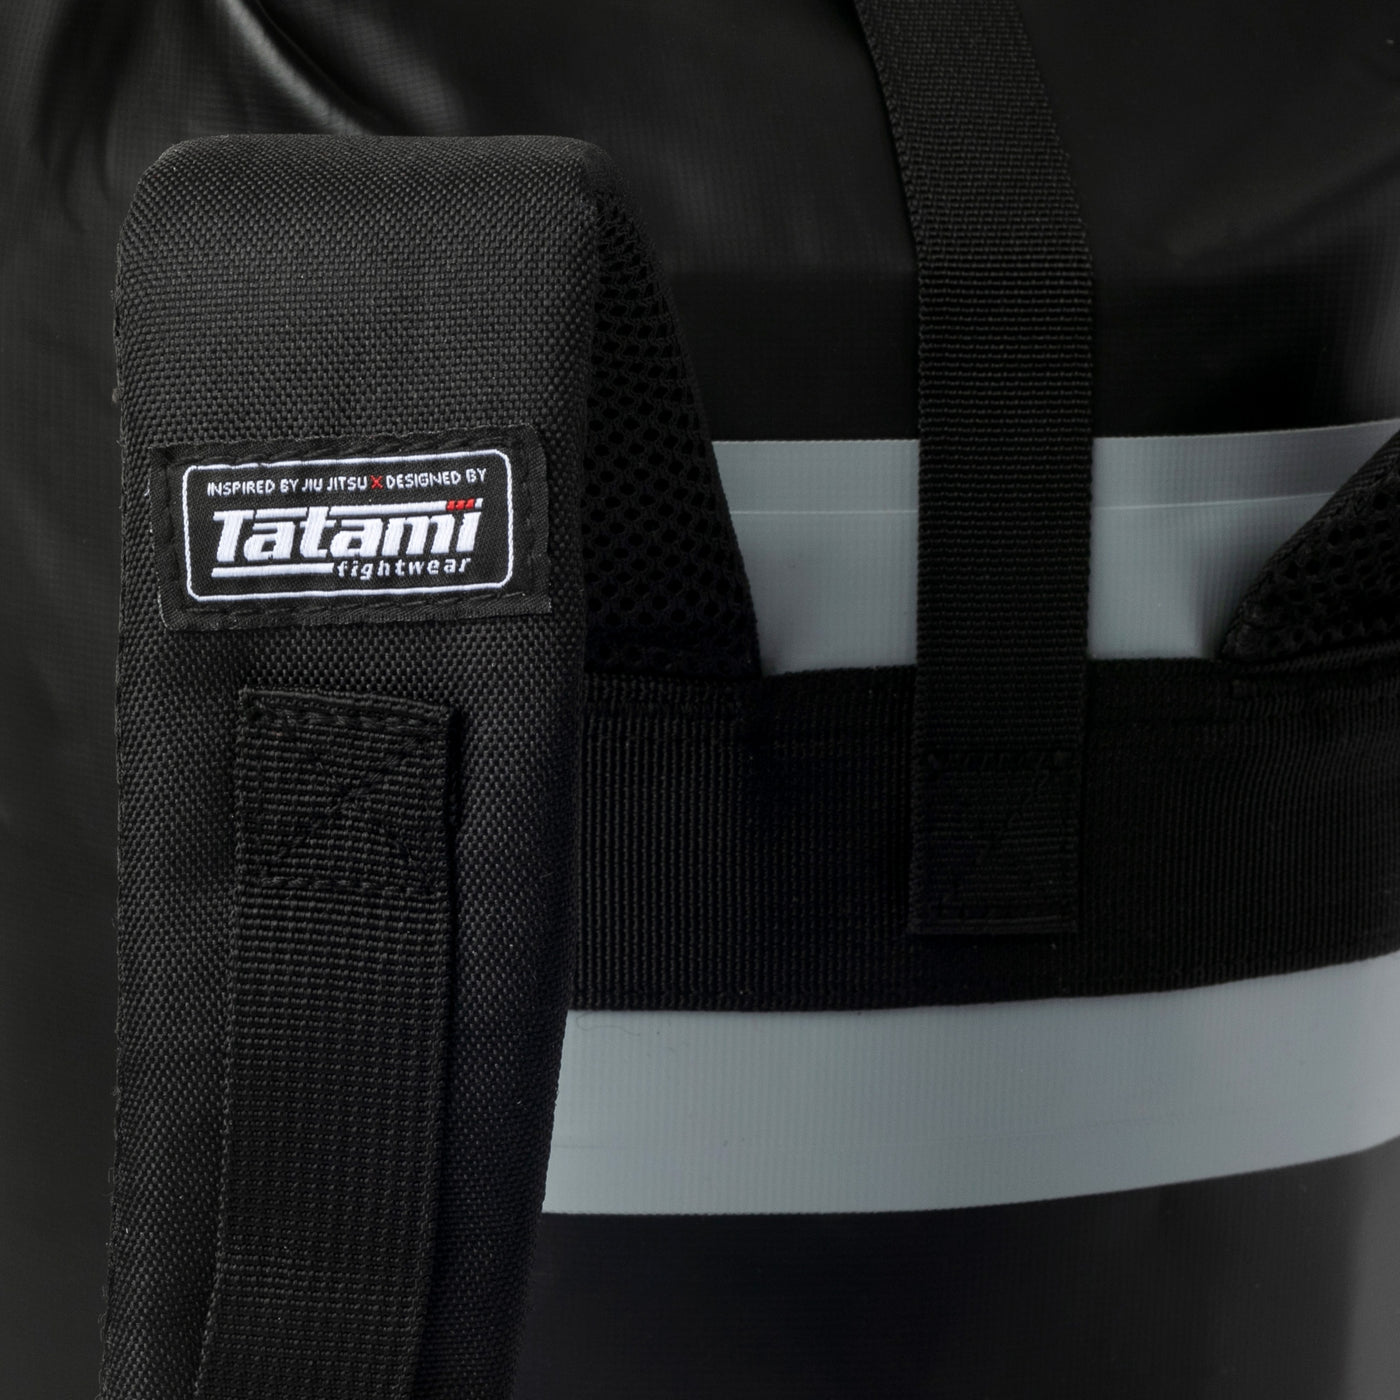 Tatami Drytech Gear Bag - Grå